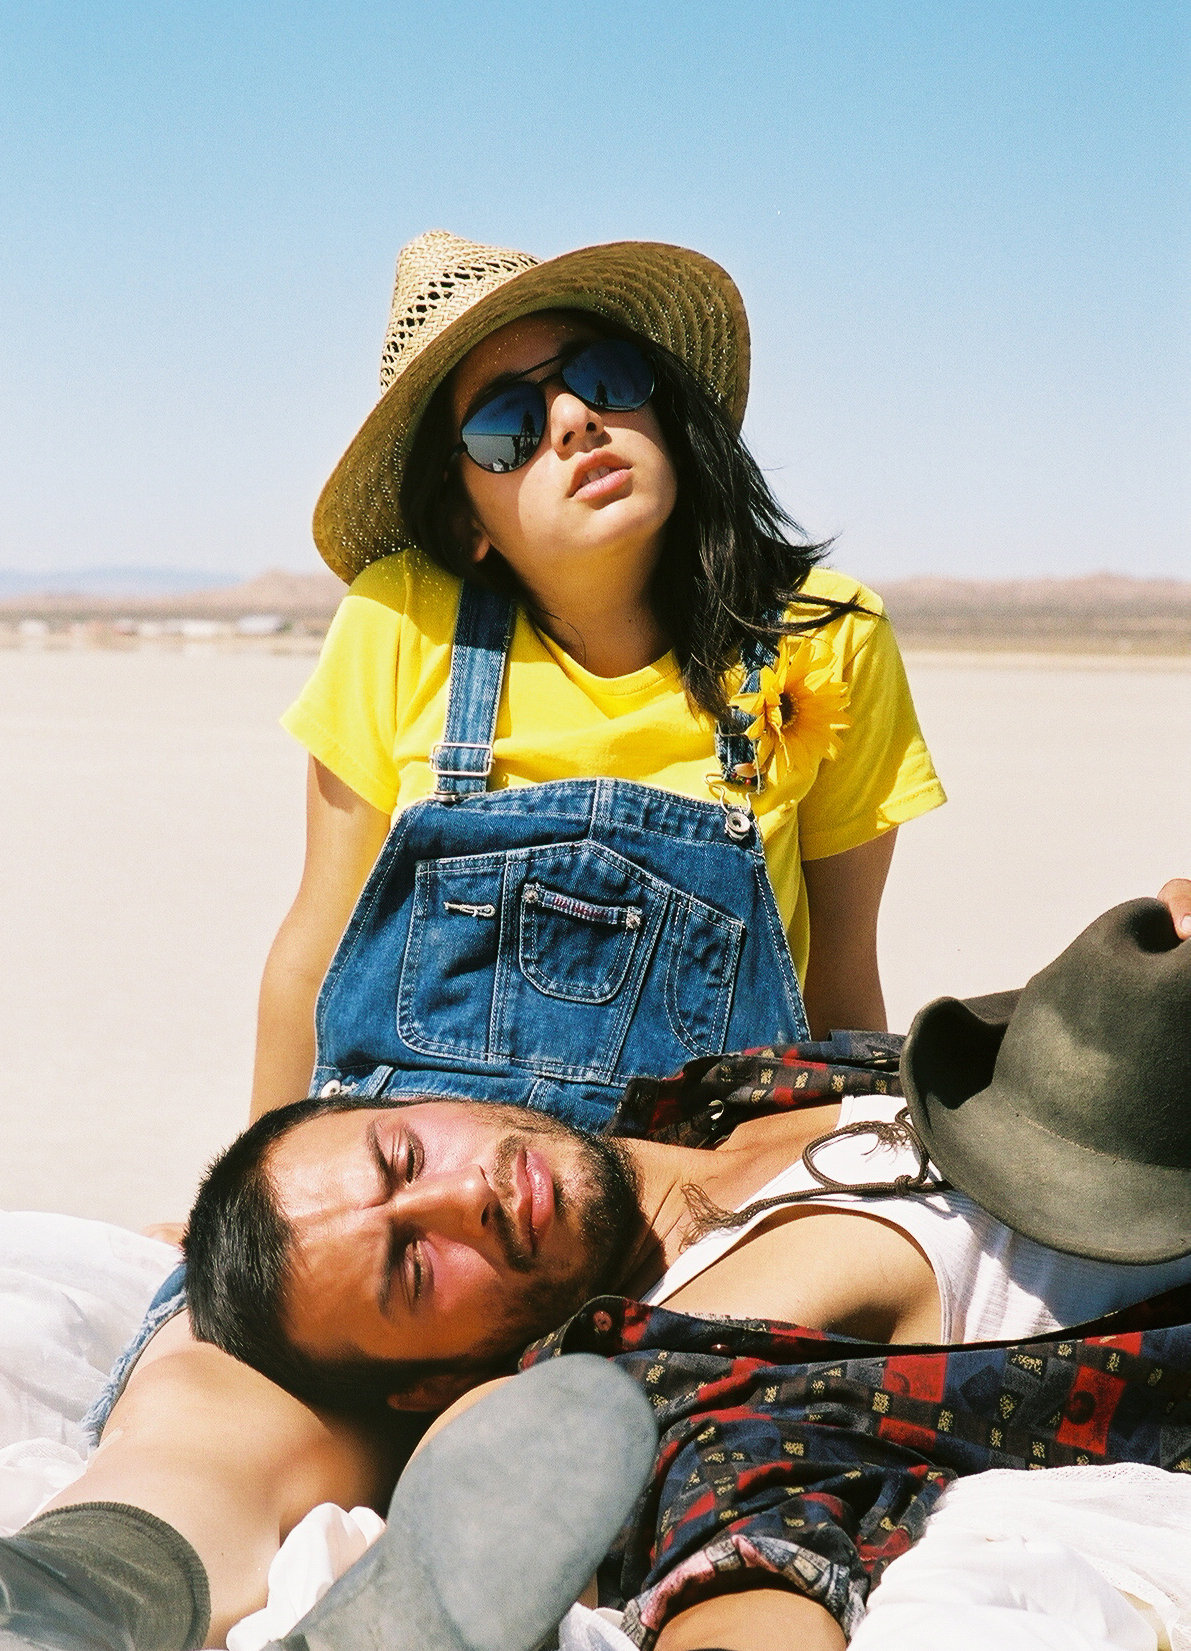 Alex (Sarah Tadayon) and Brad (Tschetan Santana) in the Desert of Dry Lake Mirage, San Bernardino (CA).